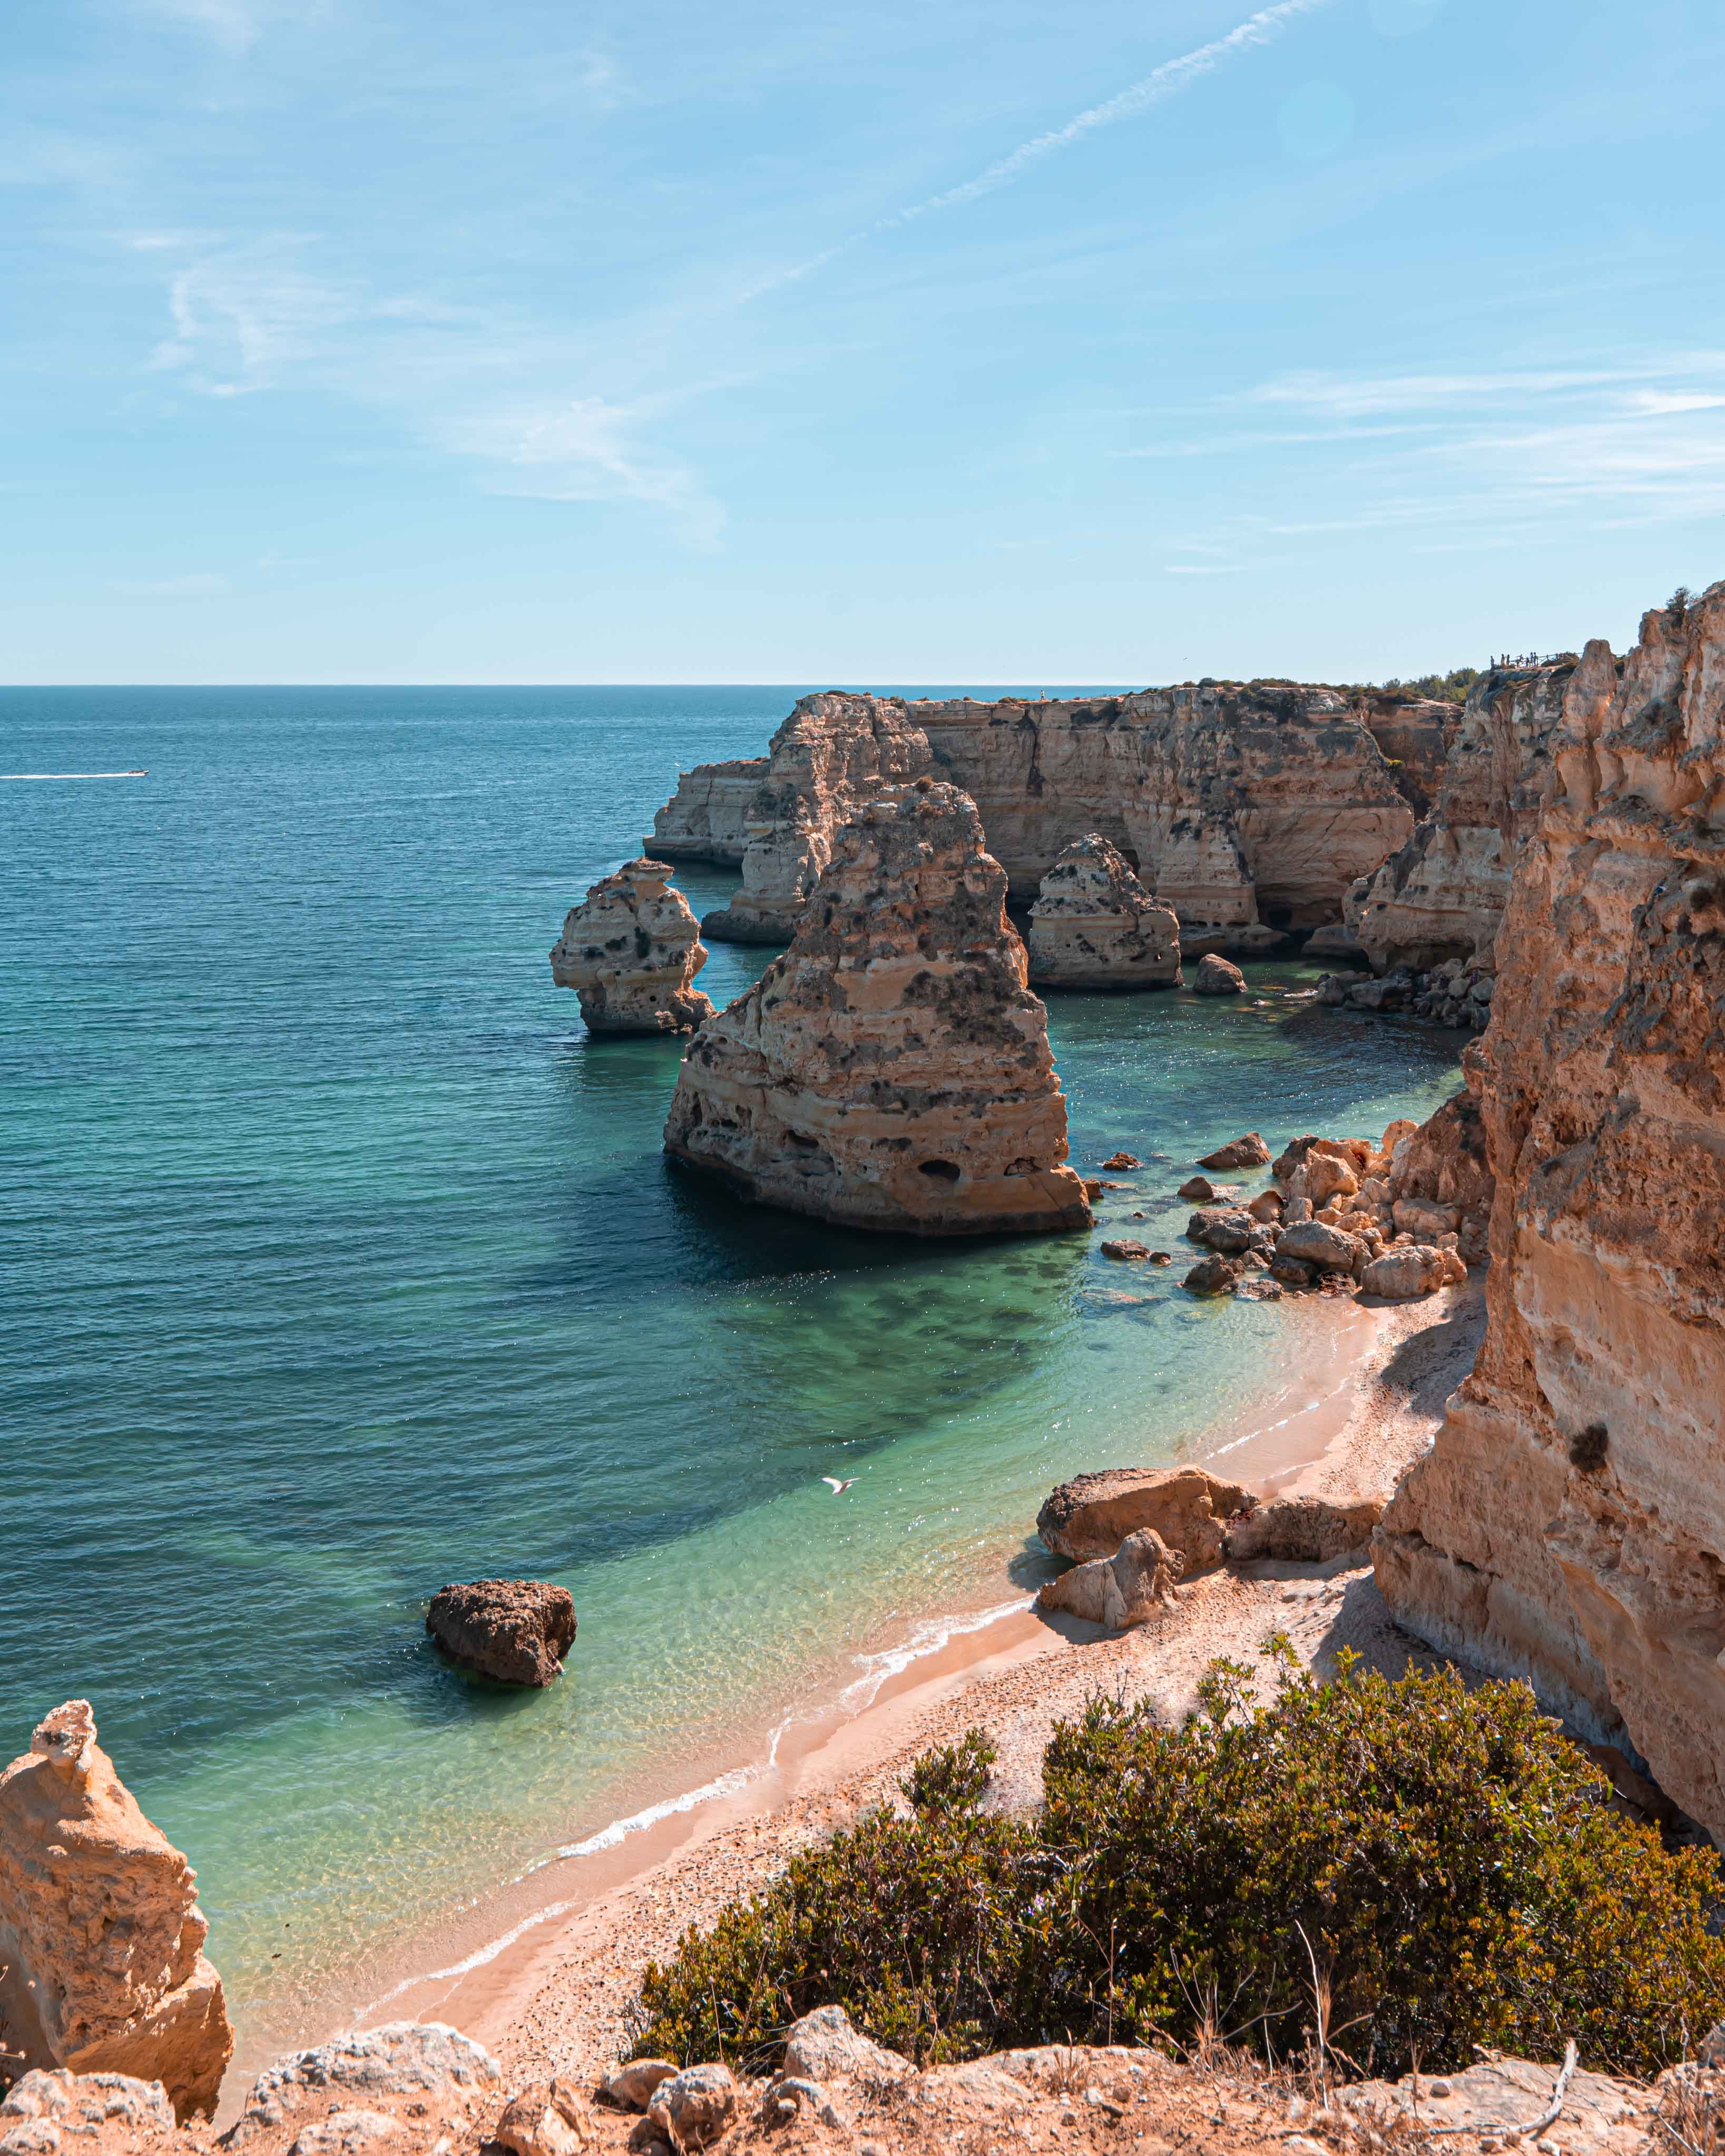 The beauty of Algarve